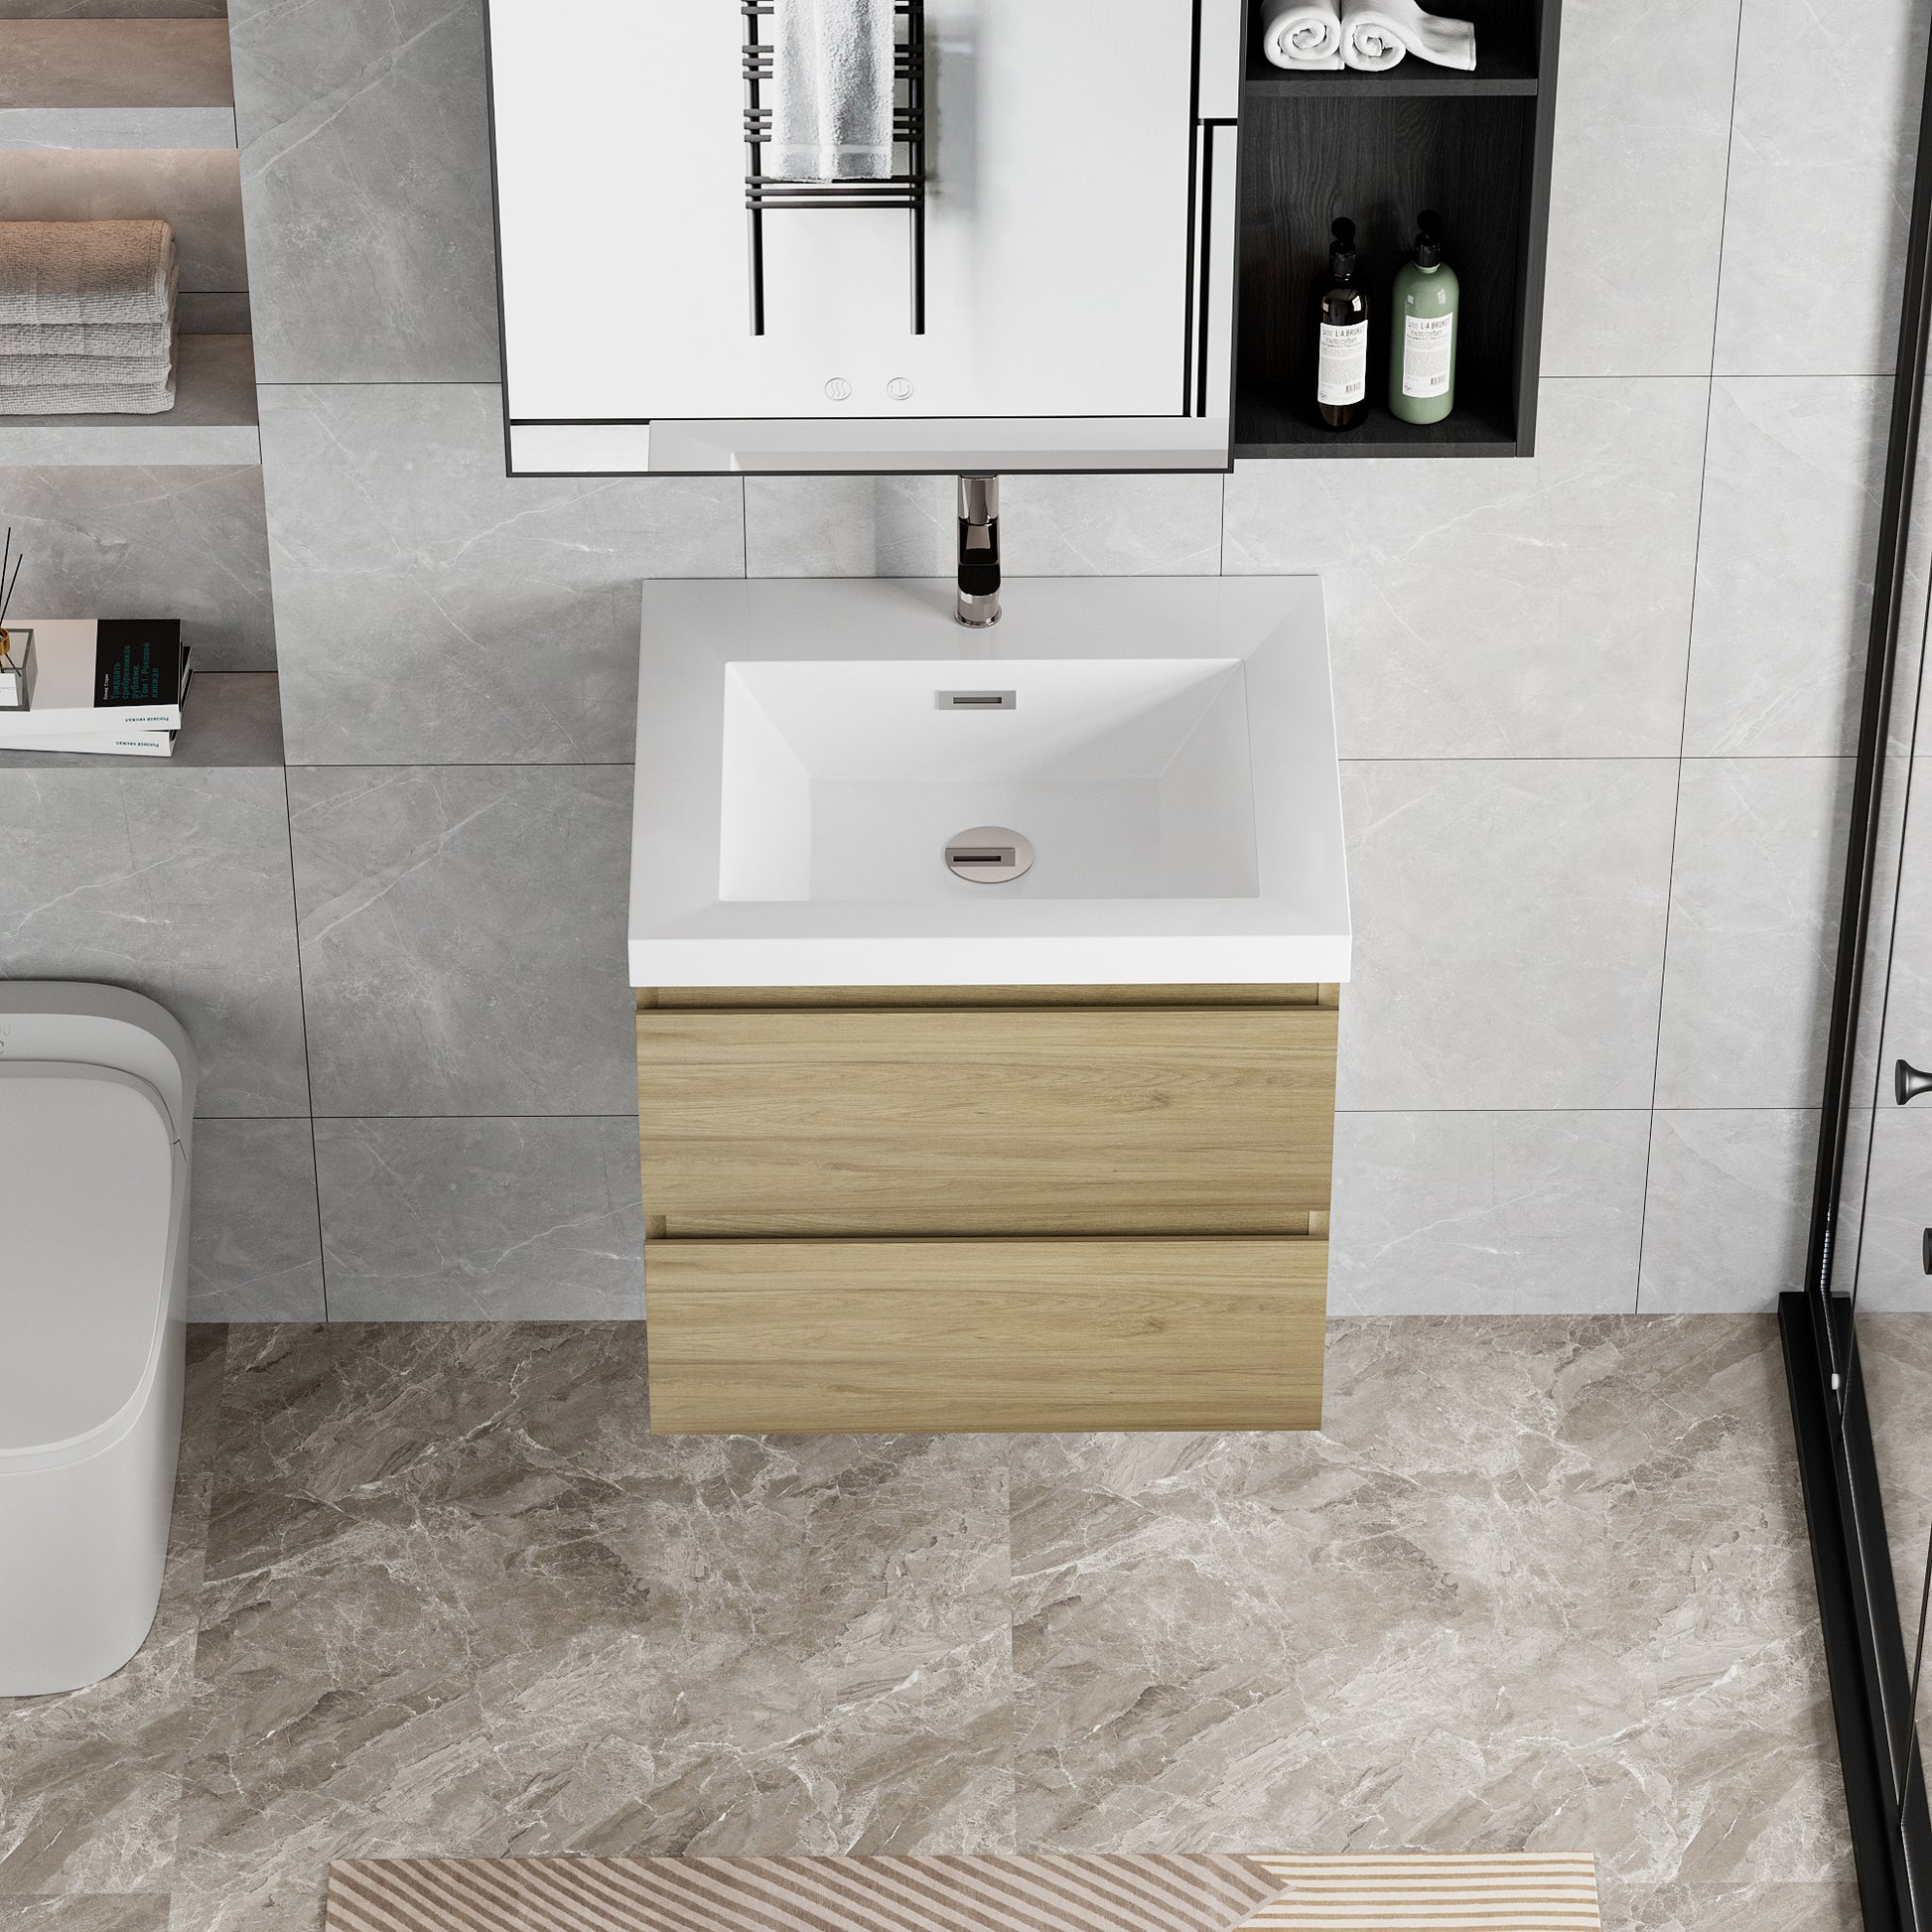 24" Floating Bathroom Vanity with Sink, Modern Wall 2-oak-bathroom-wall mounted-melamine